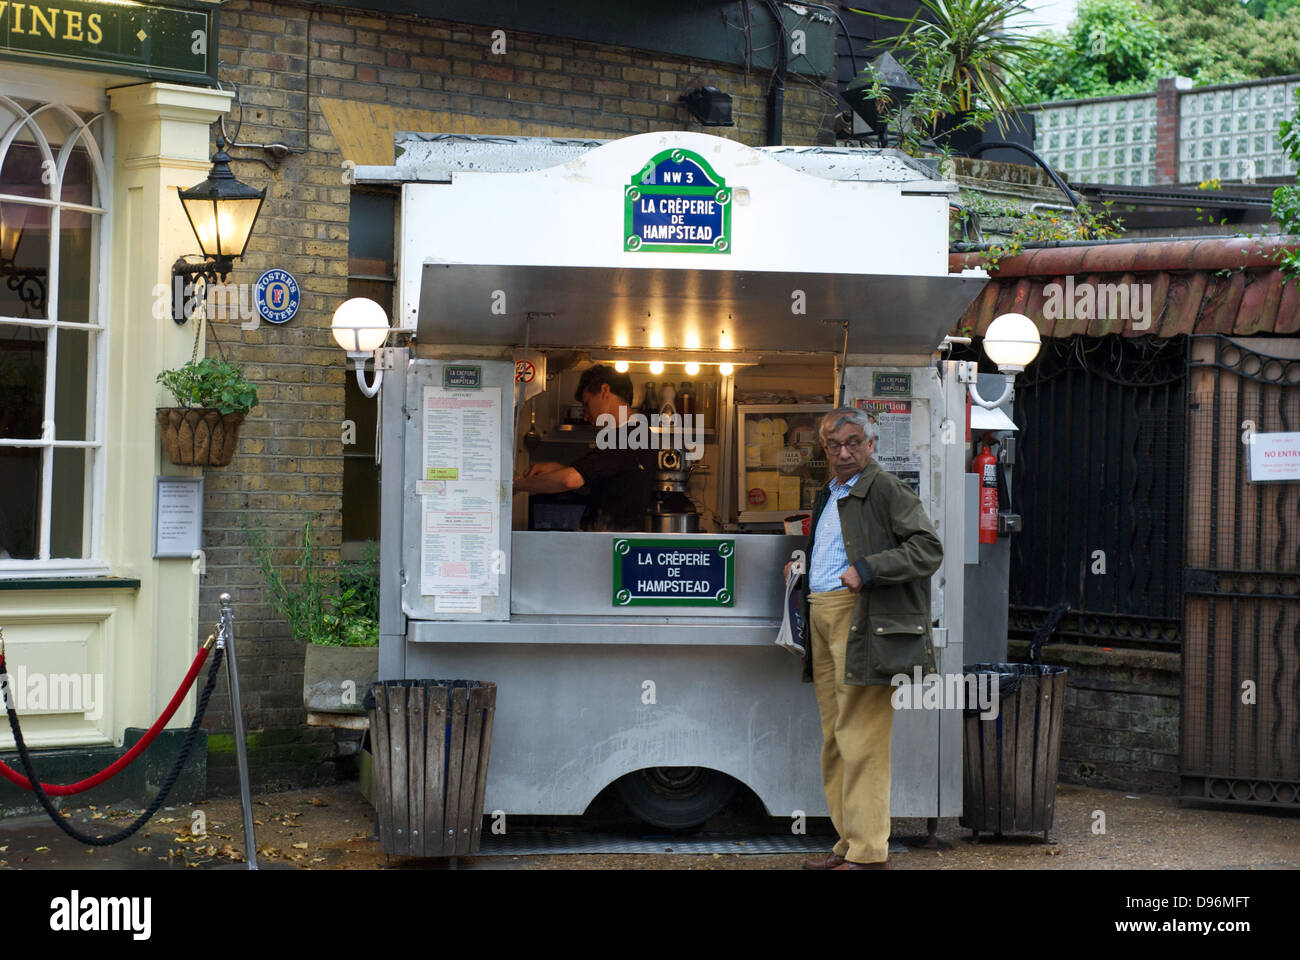 La Creperie de Hampstead crepe stand in Hampstead London Stock Photo